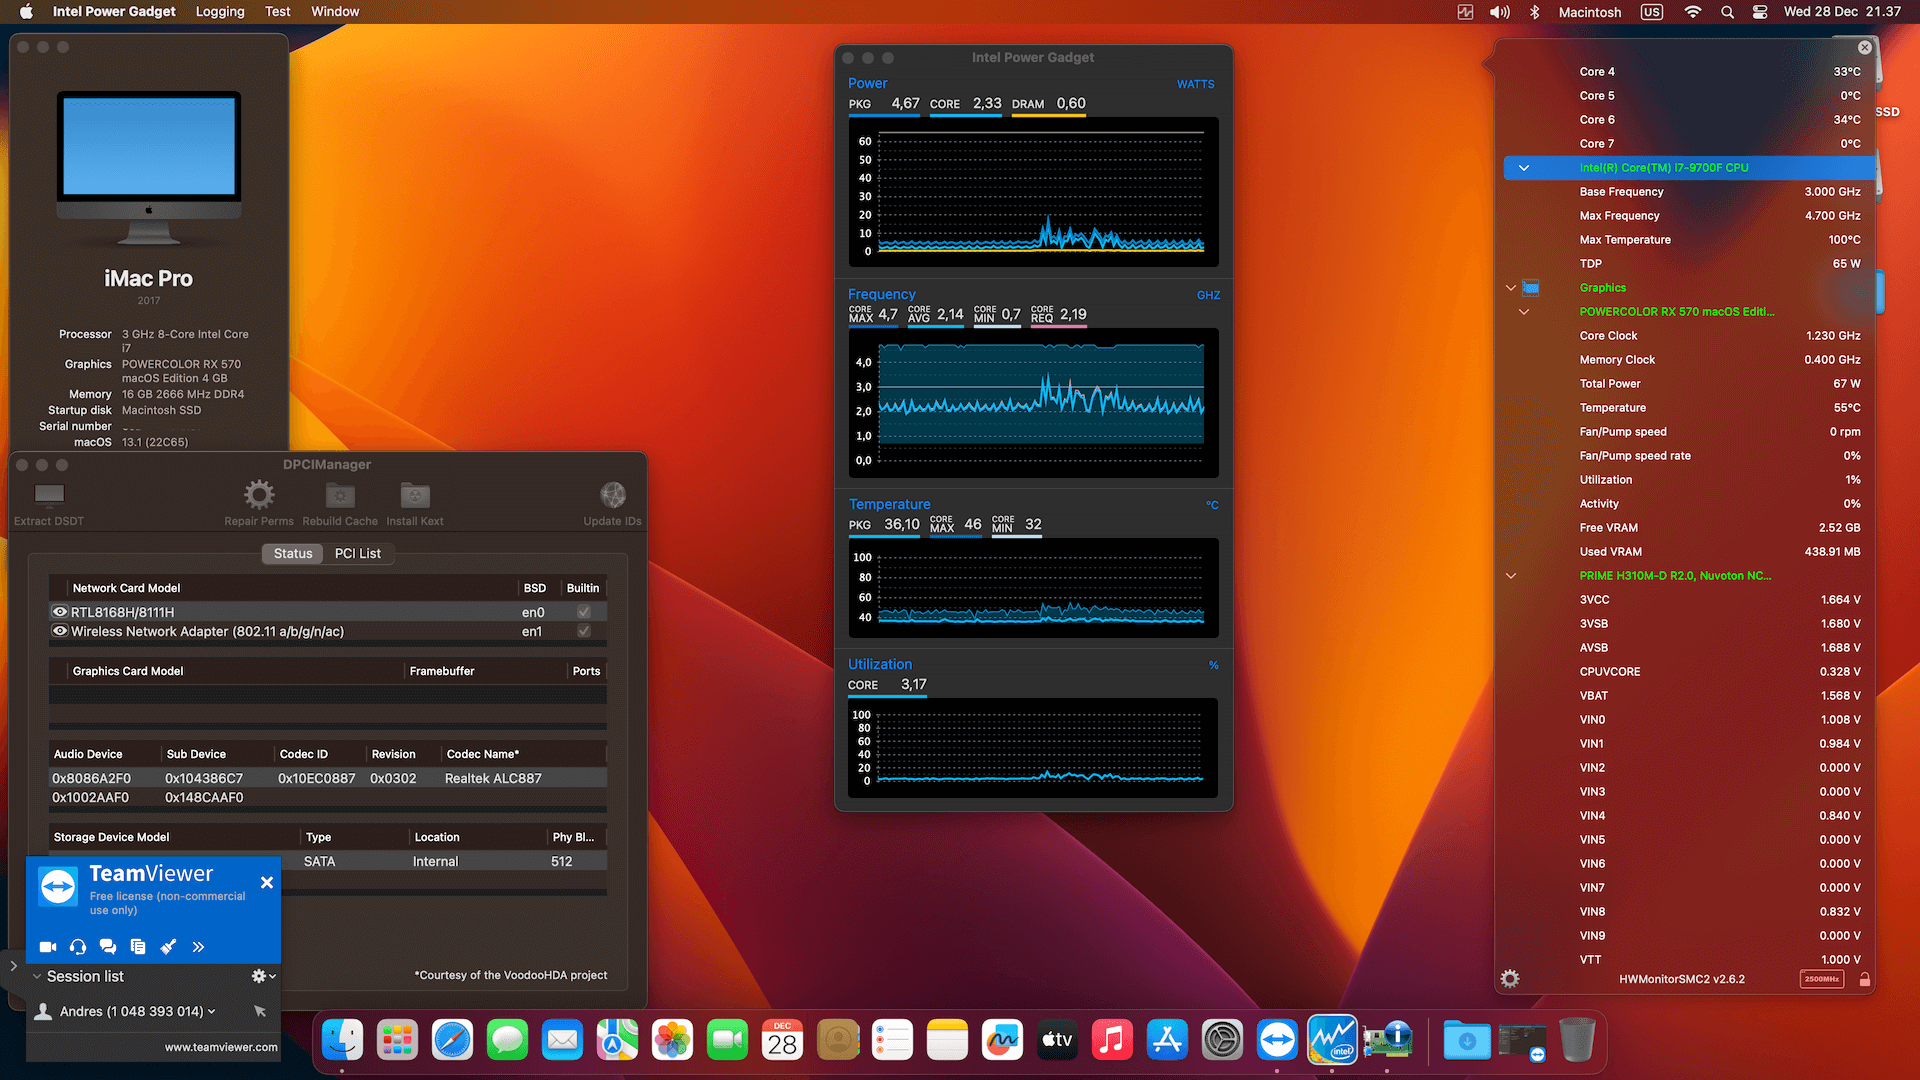 Success Hackintosh macOS Ventura 13.1 Build 22C65 in Asus Prime H310M-D R2.0 + Intel Core i7 9700F + Power Color RX 570